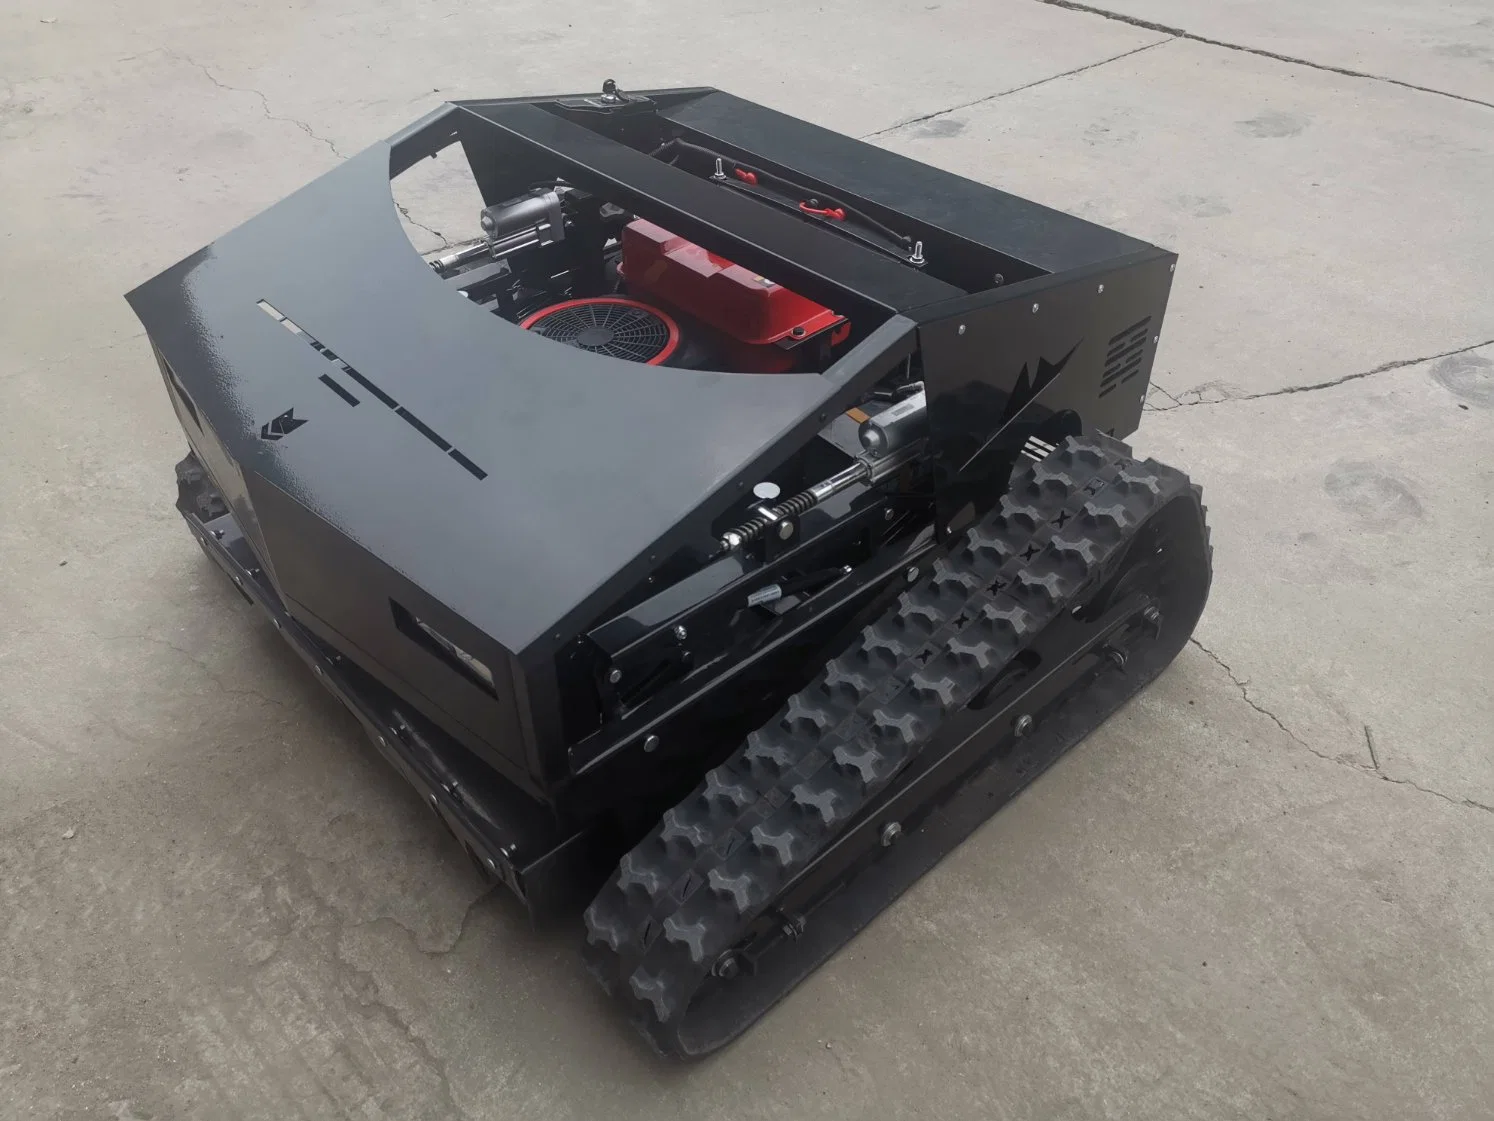 Robot Mini Lawn Mower de Crawler con control remoto multifuncional